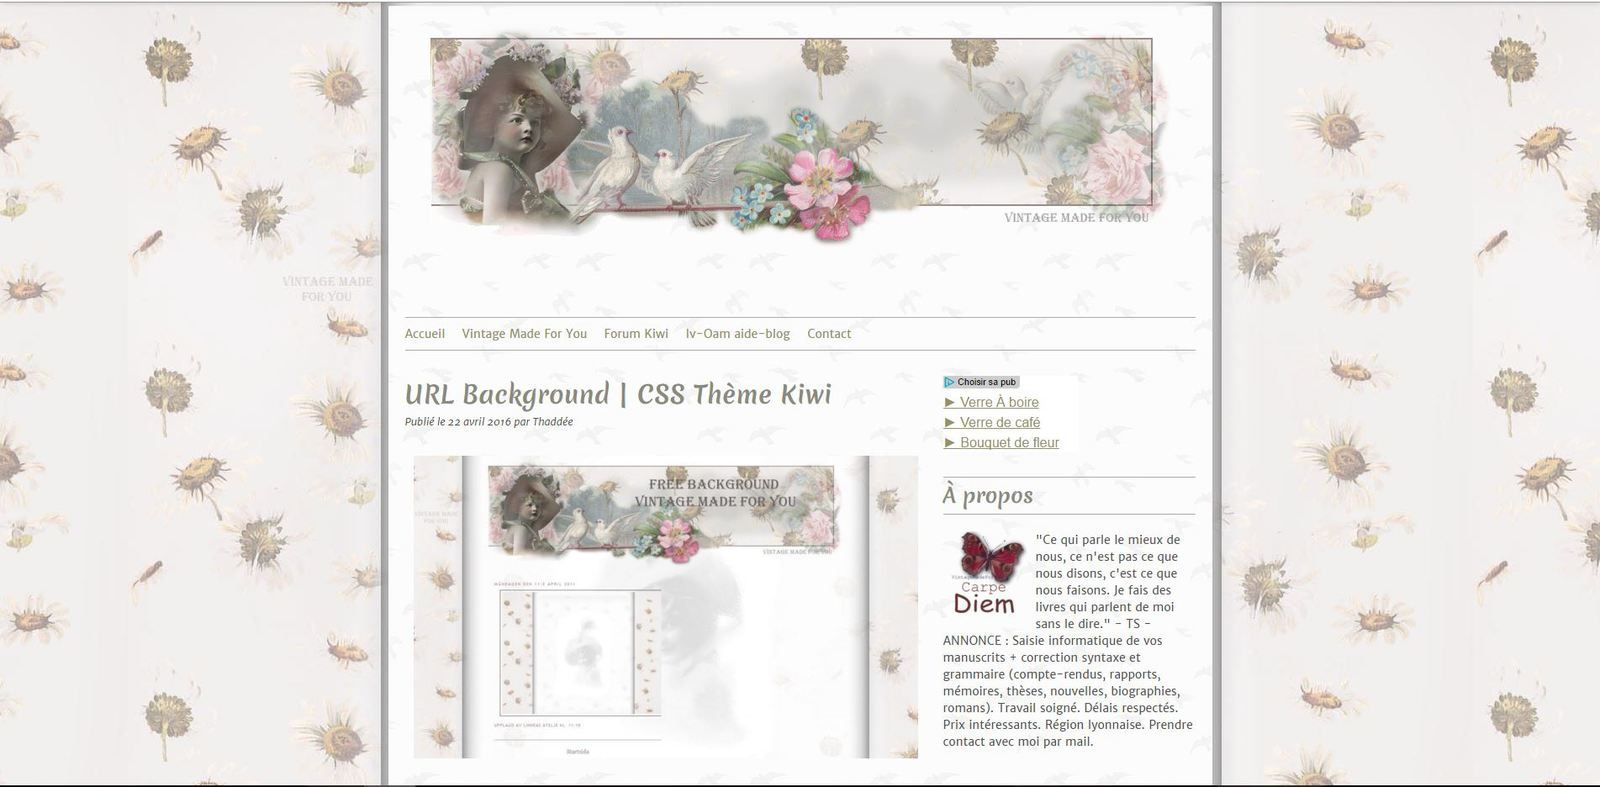 PDV 21 avril 2016 - URL Background | CSS Thème Kiwi